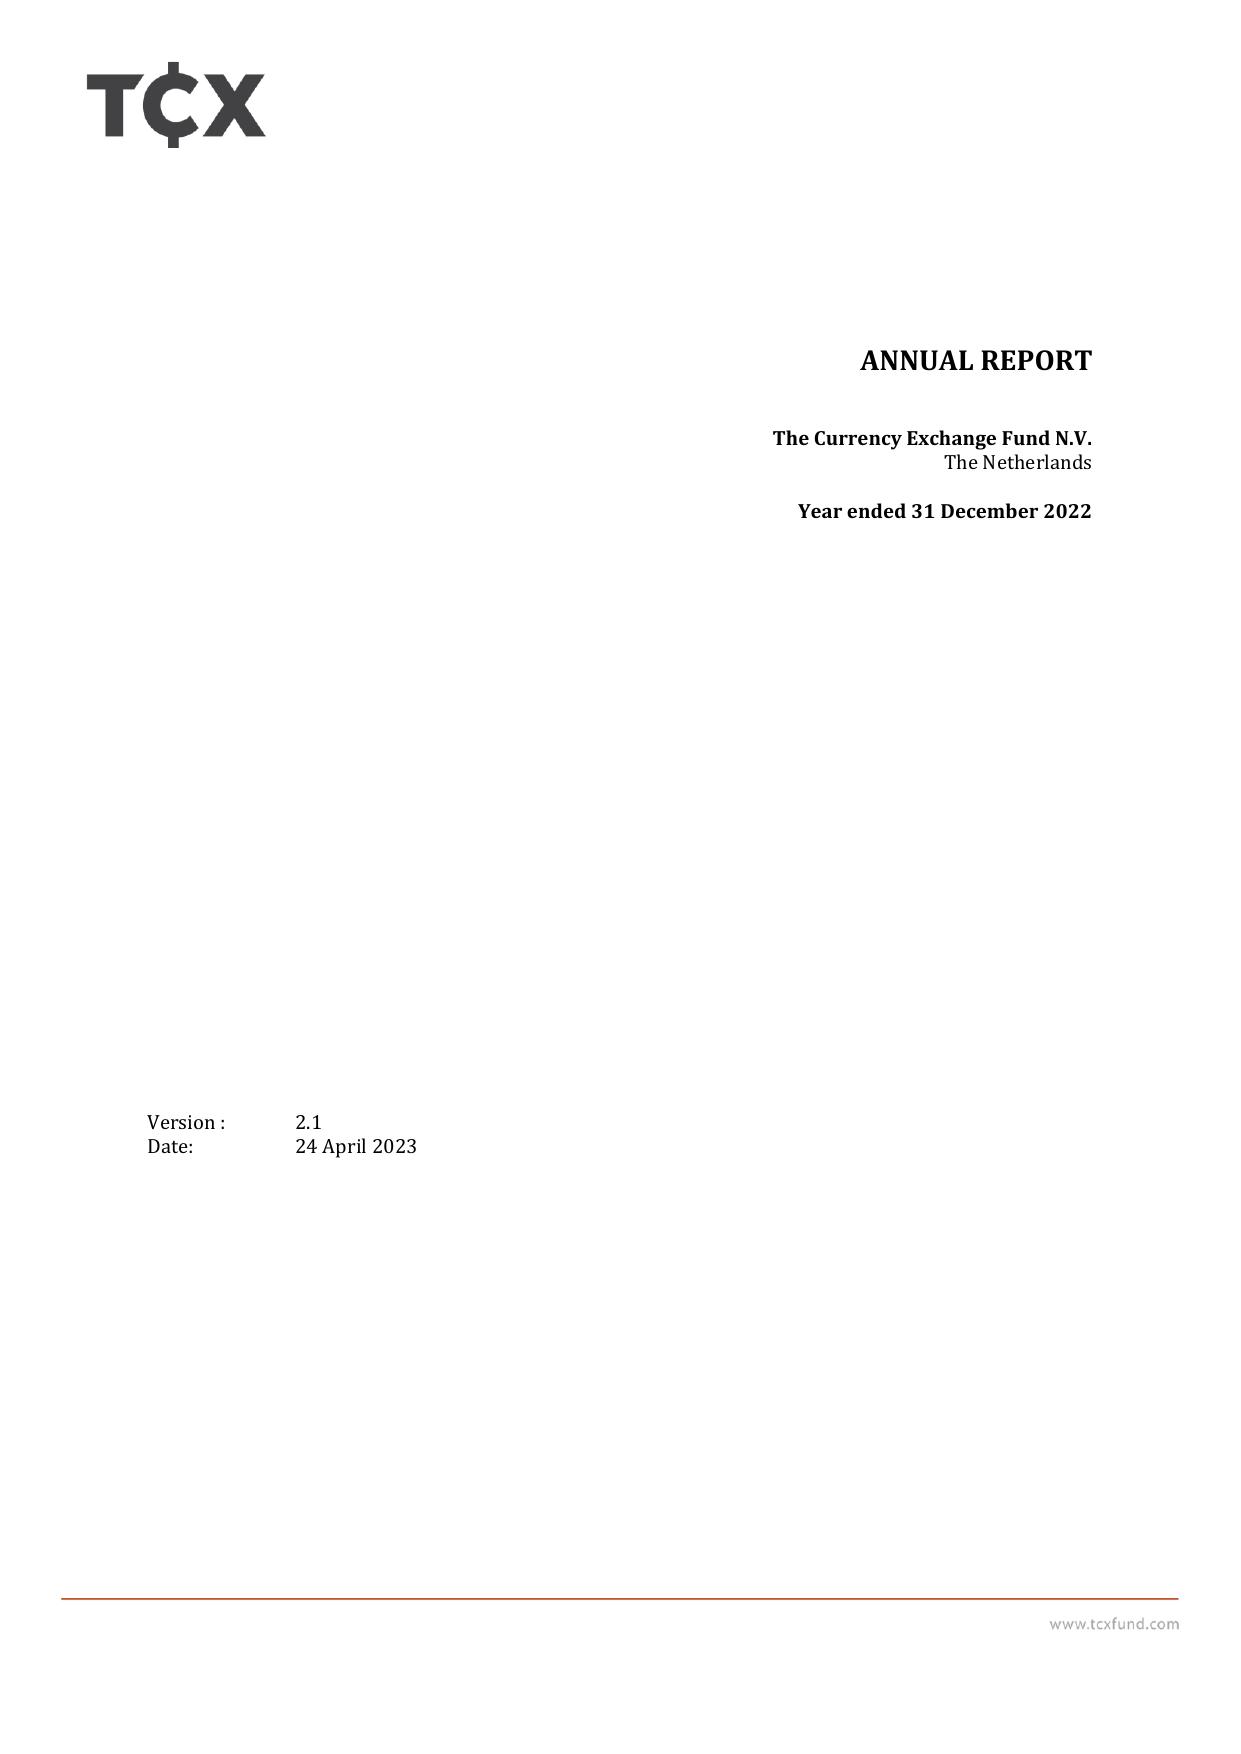 TCXFUND 2023 Annual Report